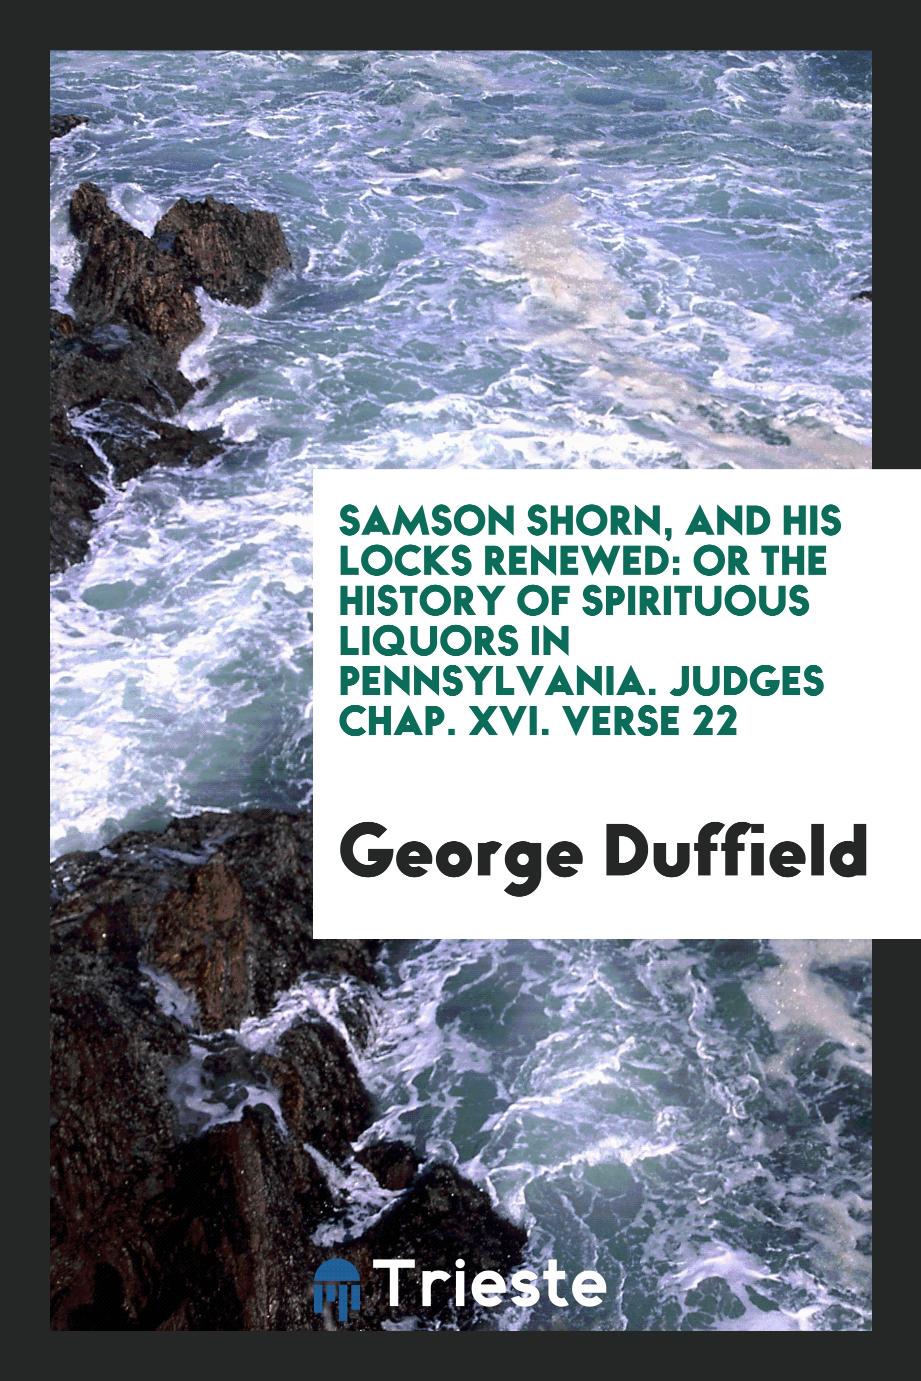 Samson Shorn, and His Locks Renewed: Or The History of Spirituous Liquors in Pennsylvania. Judges chap. XVI. verse 22